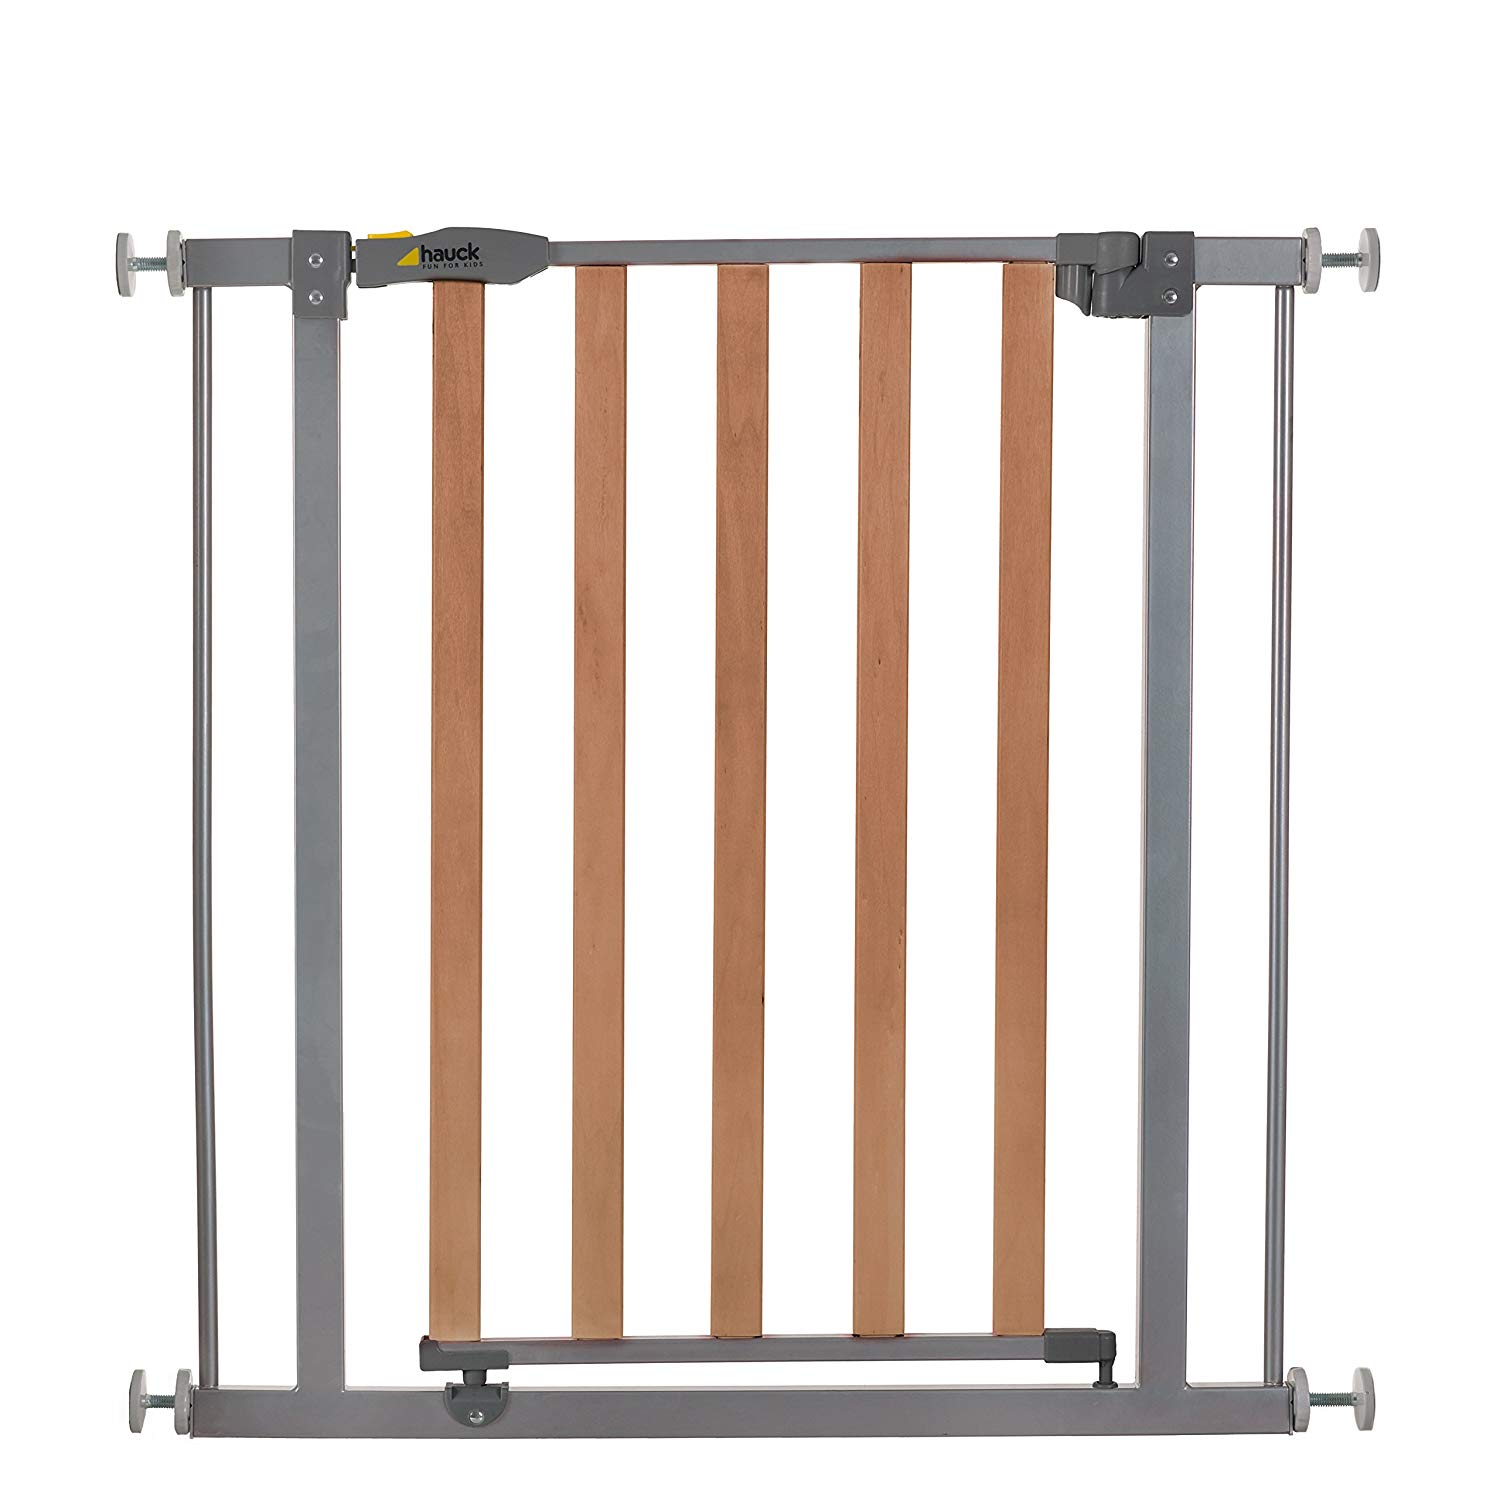 Hauck - Πόρτα Ασφαλείας Stop - wood lock safety gate